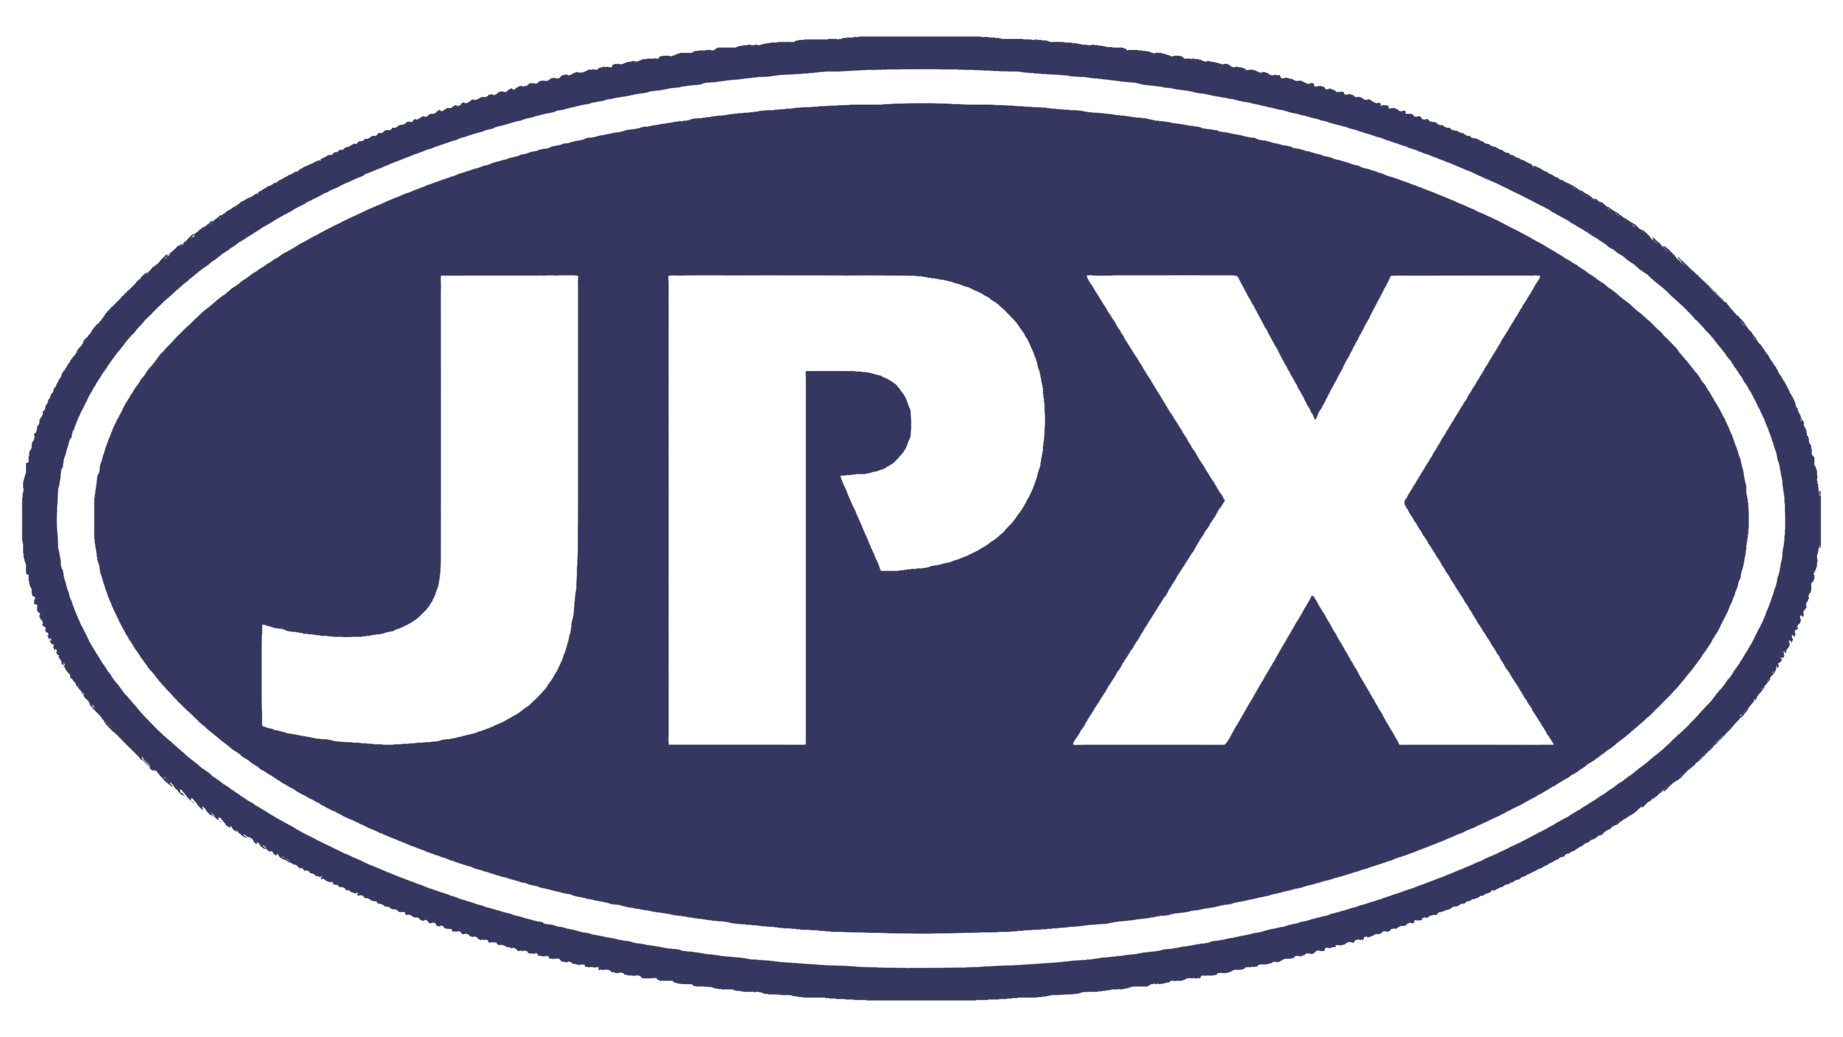 Jpx sign